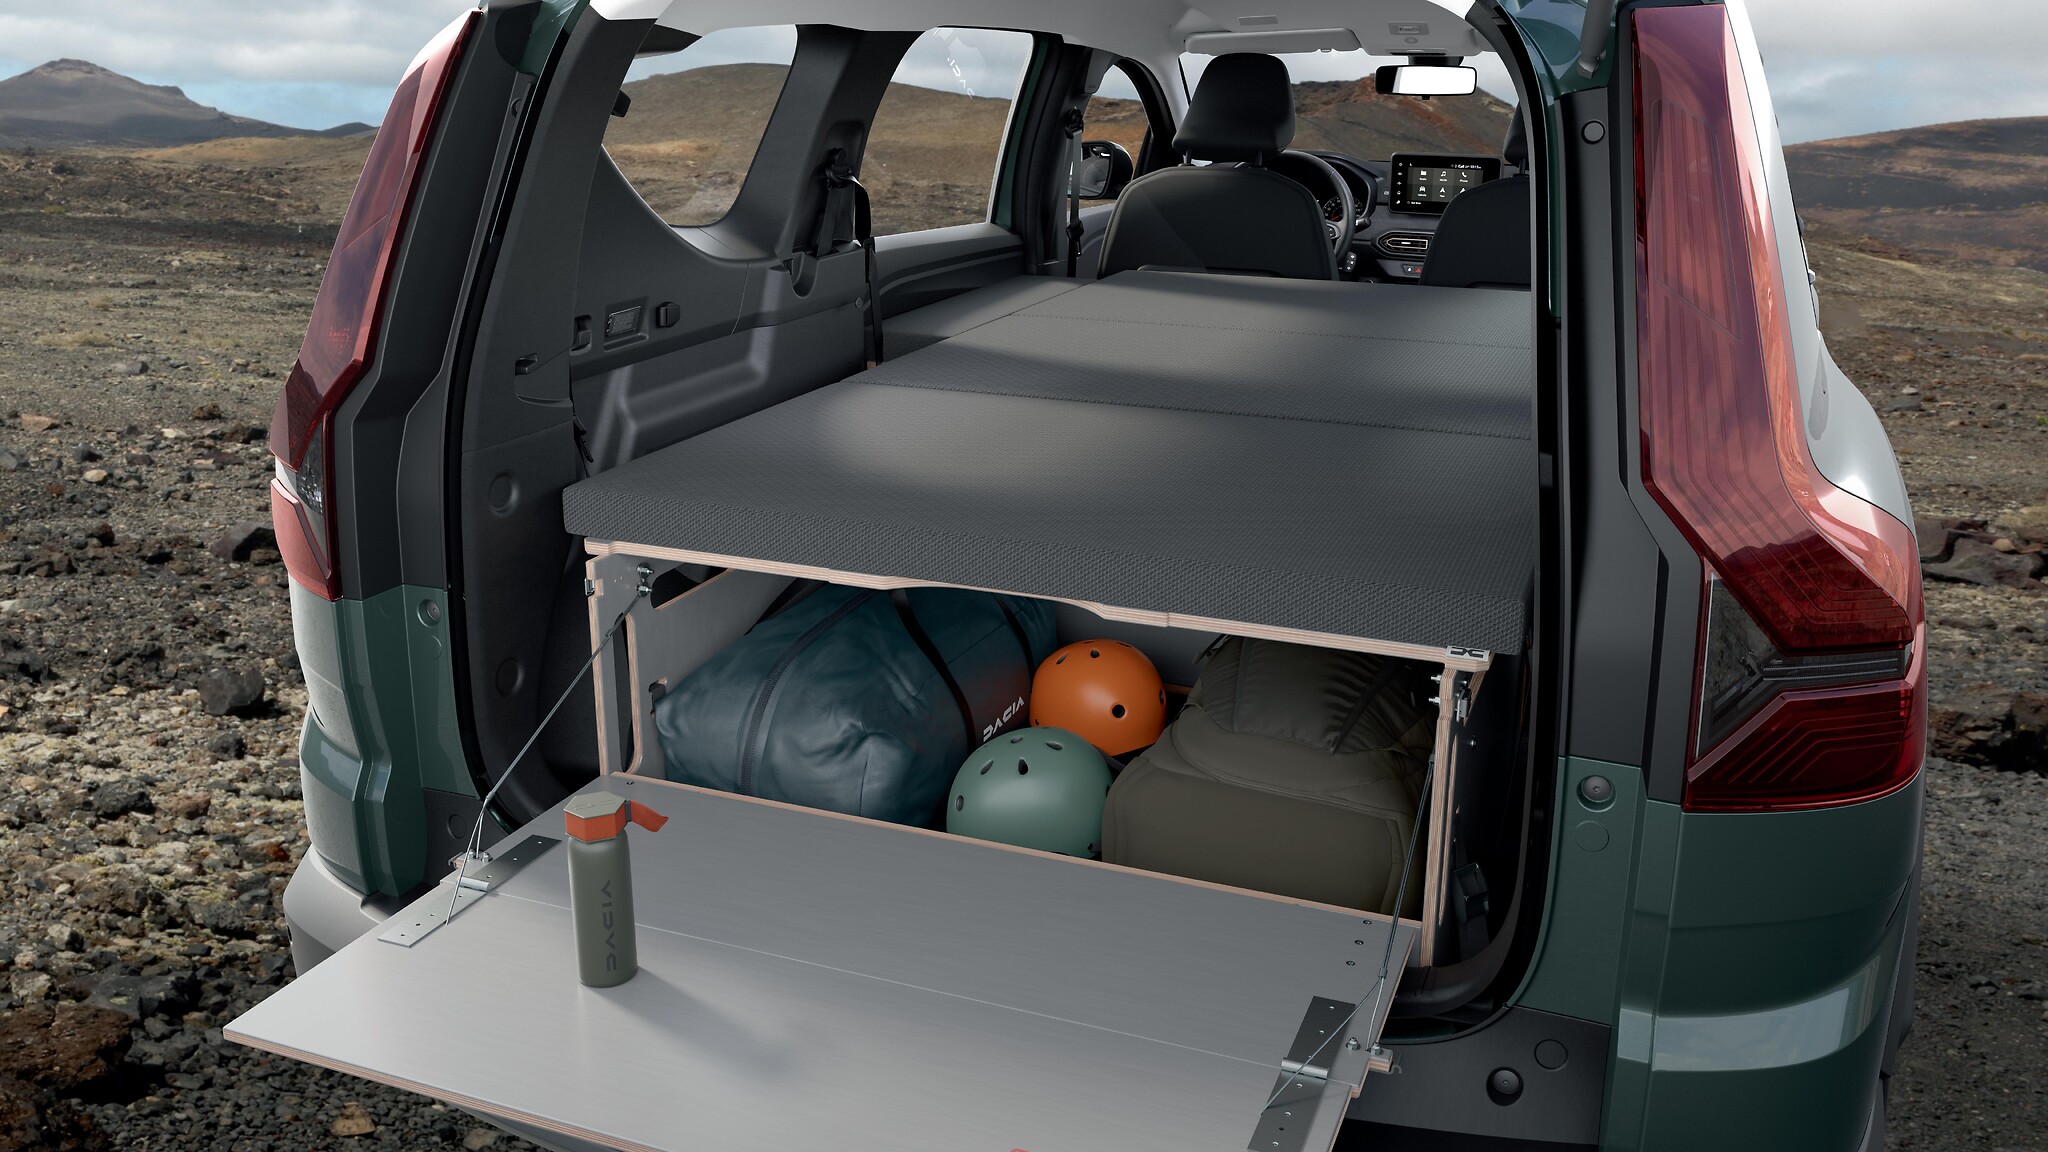 Kit de equipamiento interior para camping de Dacia.